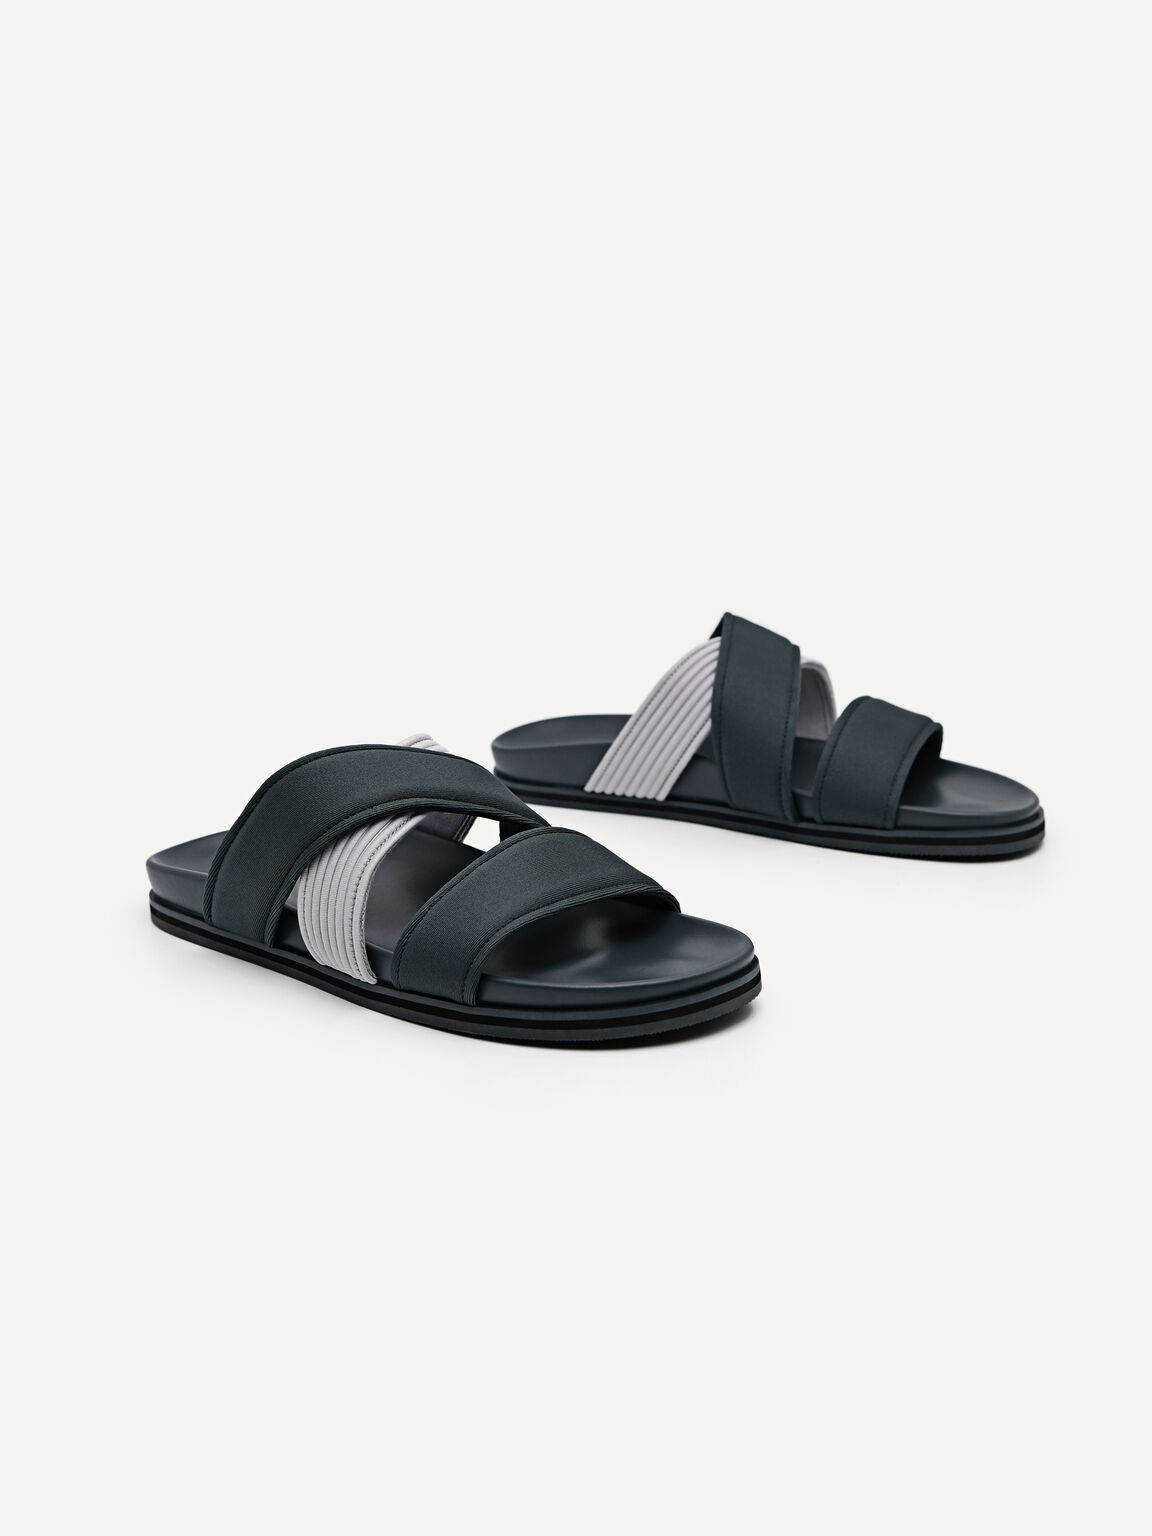 rePEDRO Pleated Sandals, Grey, hi-res